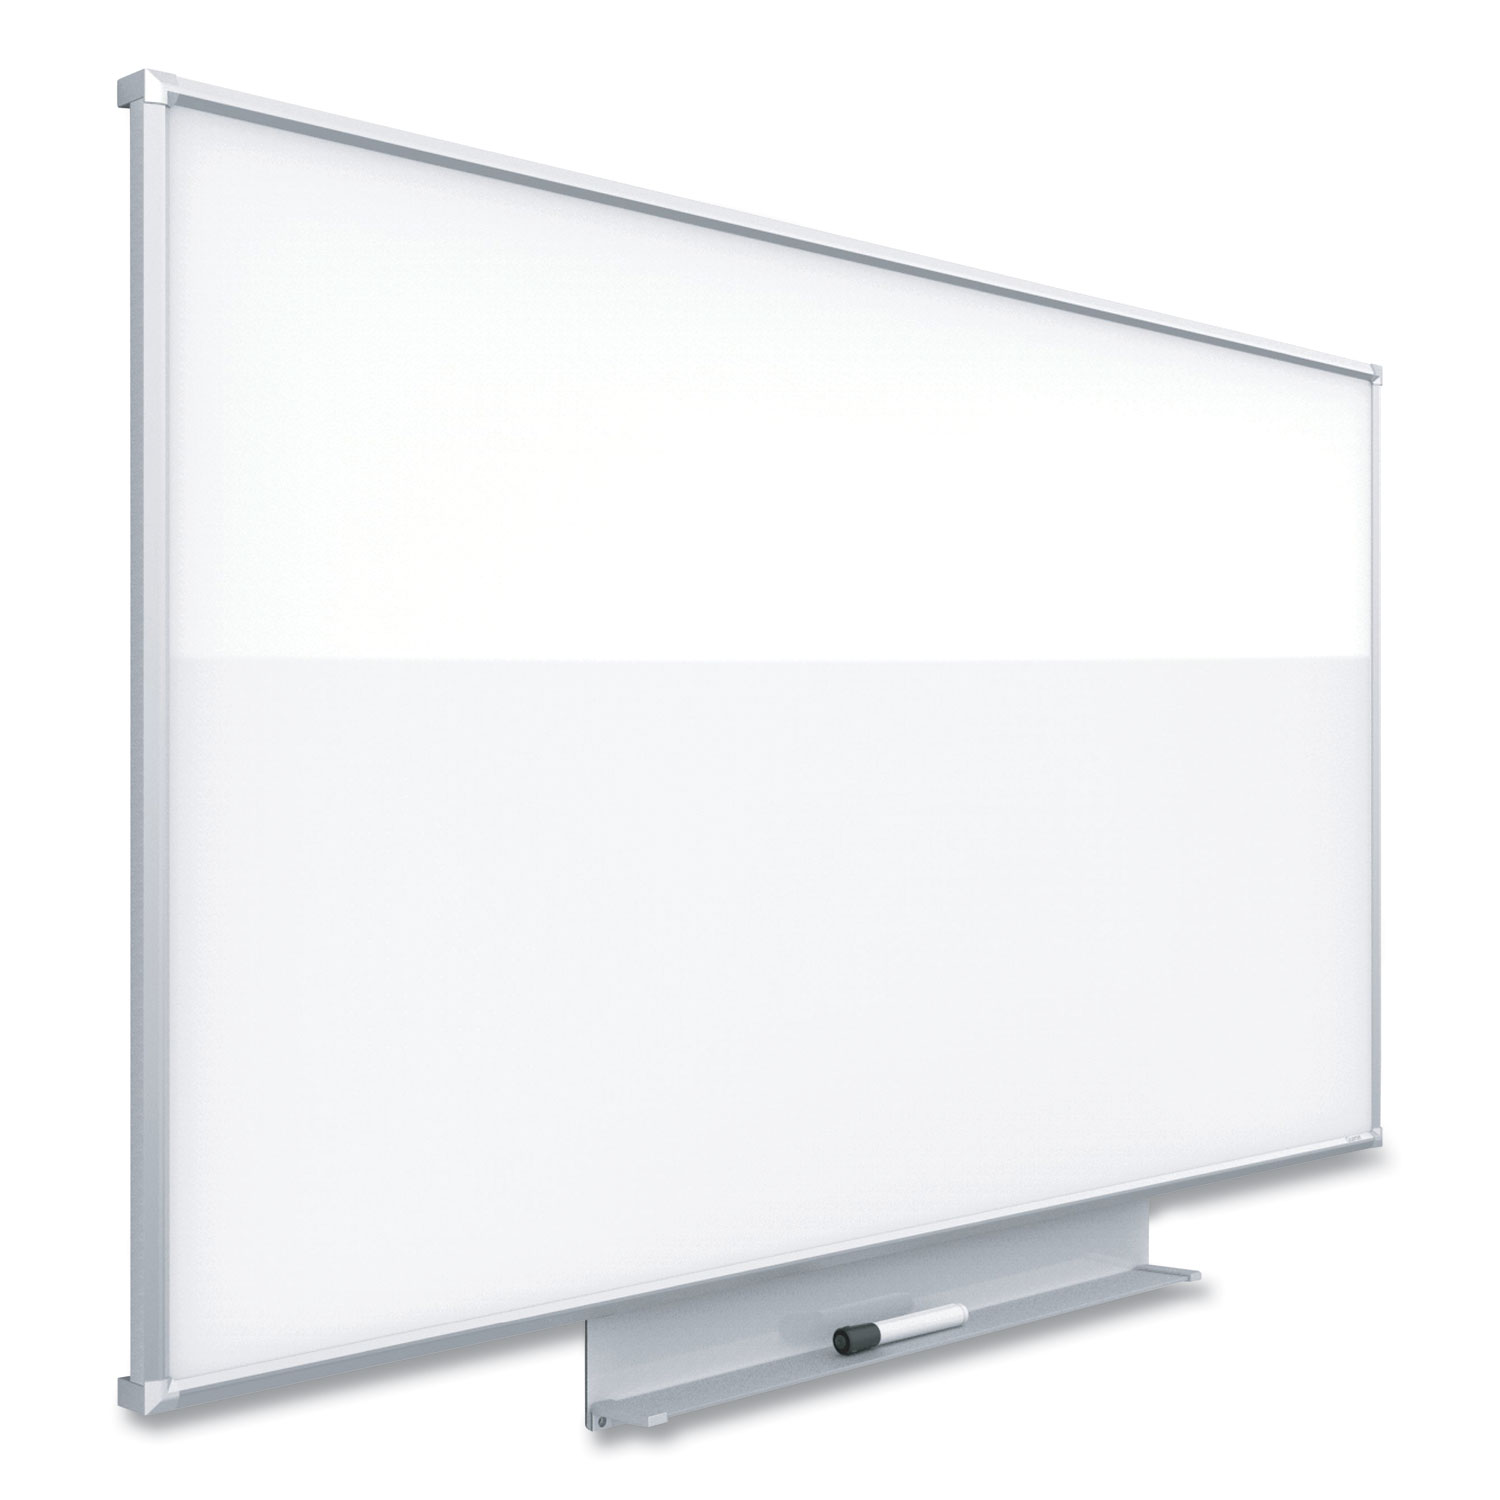 Quartet® Silhouette Total Erase Whiteboard, 85 x 48, Silver Aluminum Frame